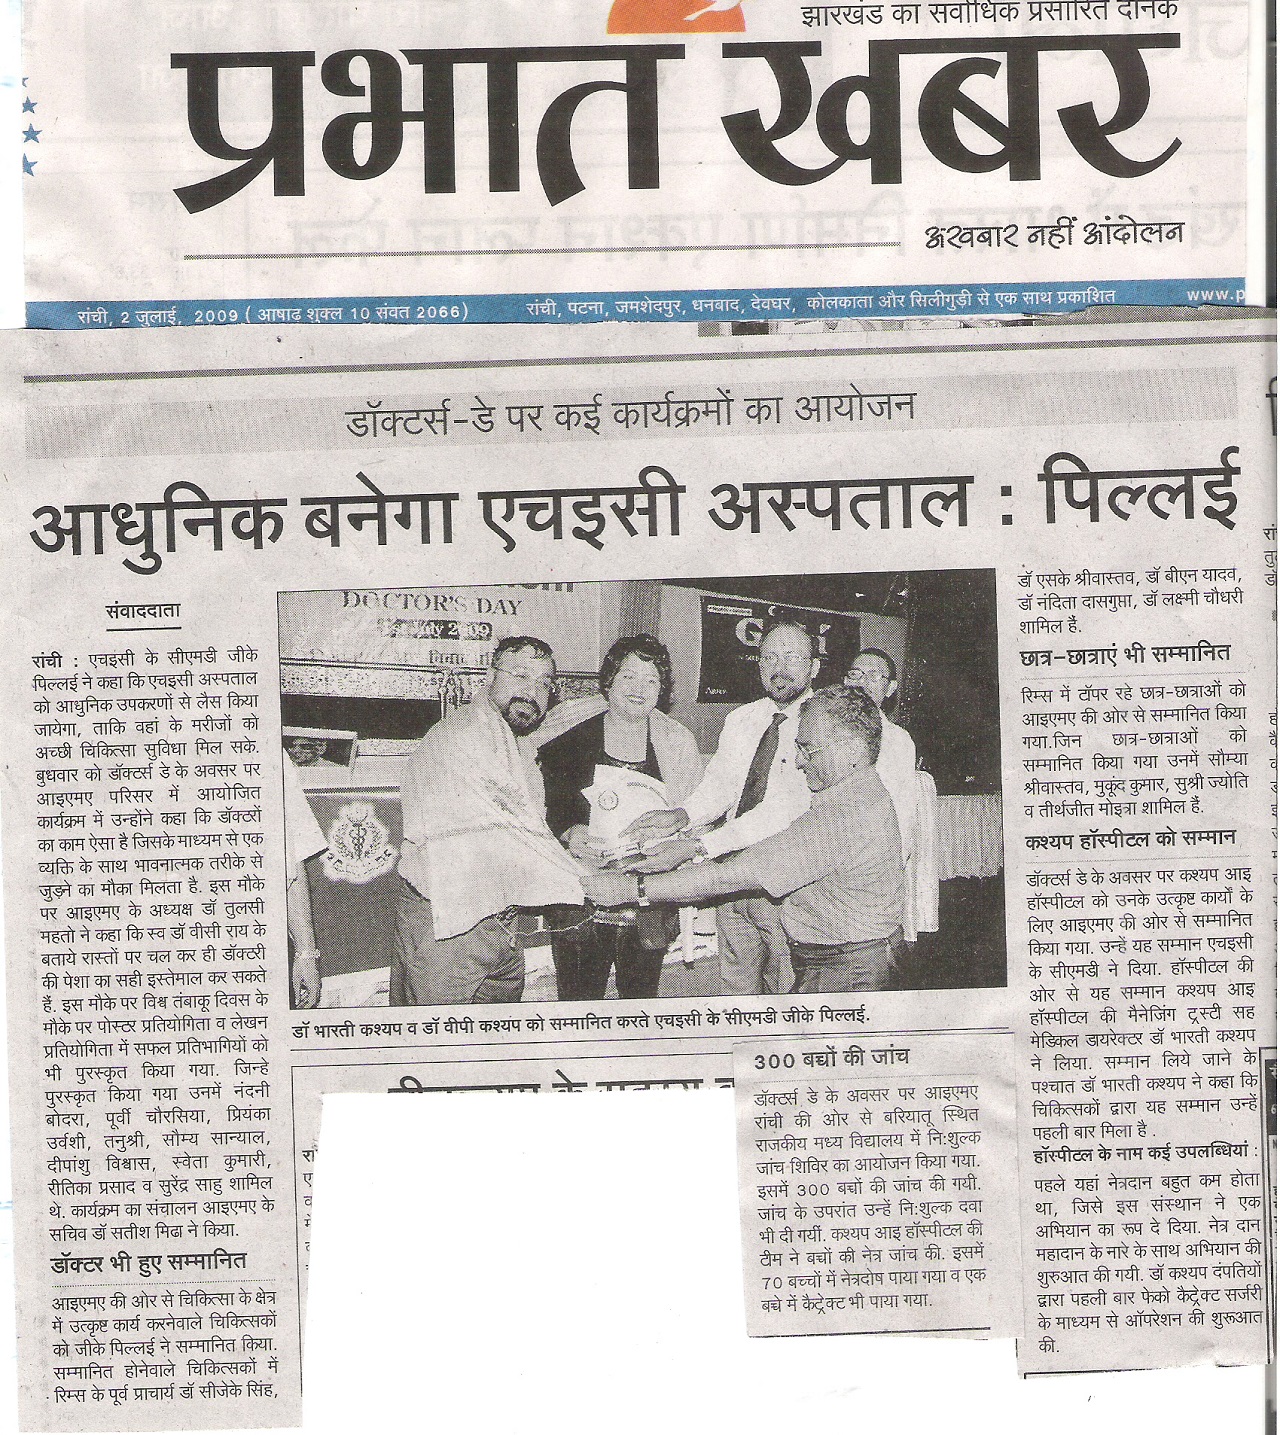 Dr. Bharti Kashyap: Award by State IMA, Jharkhand - 2009